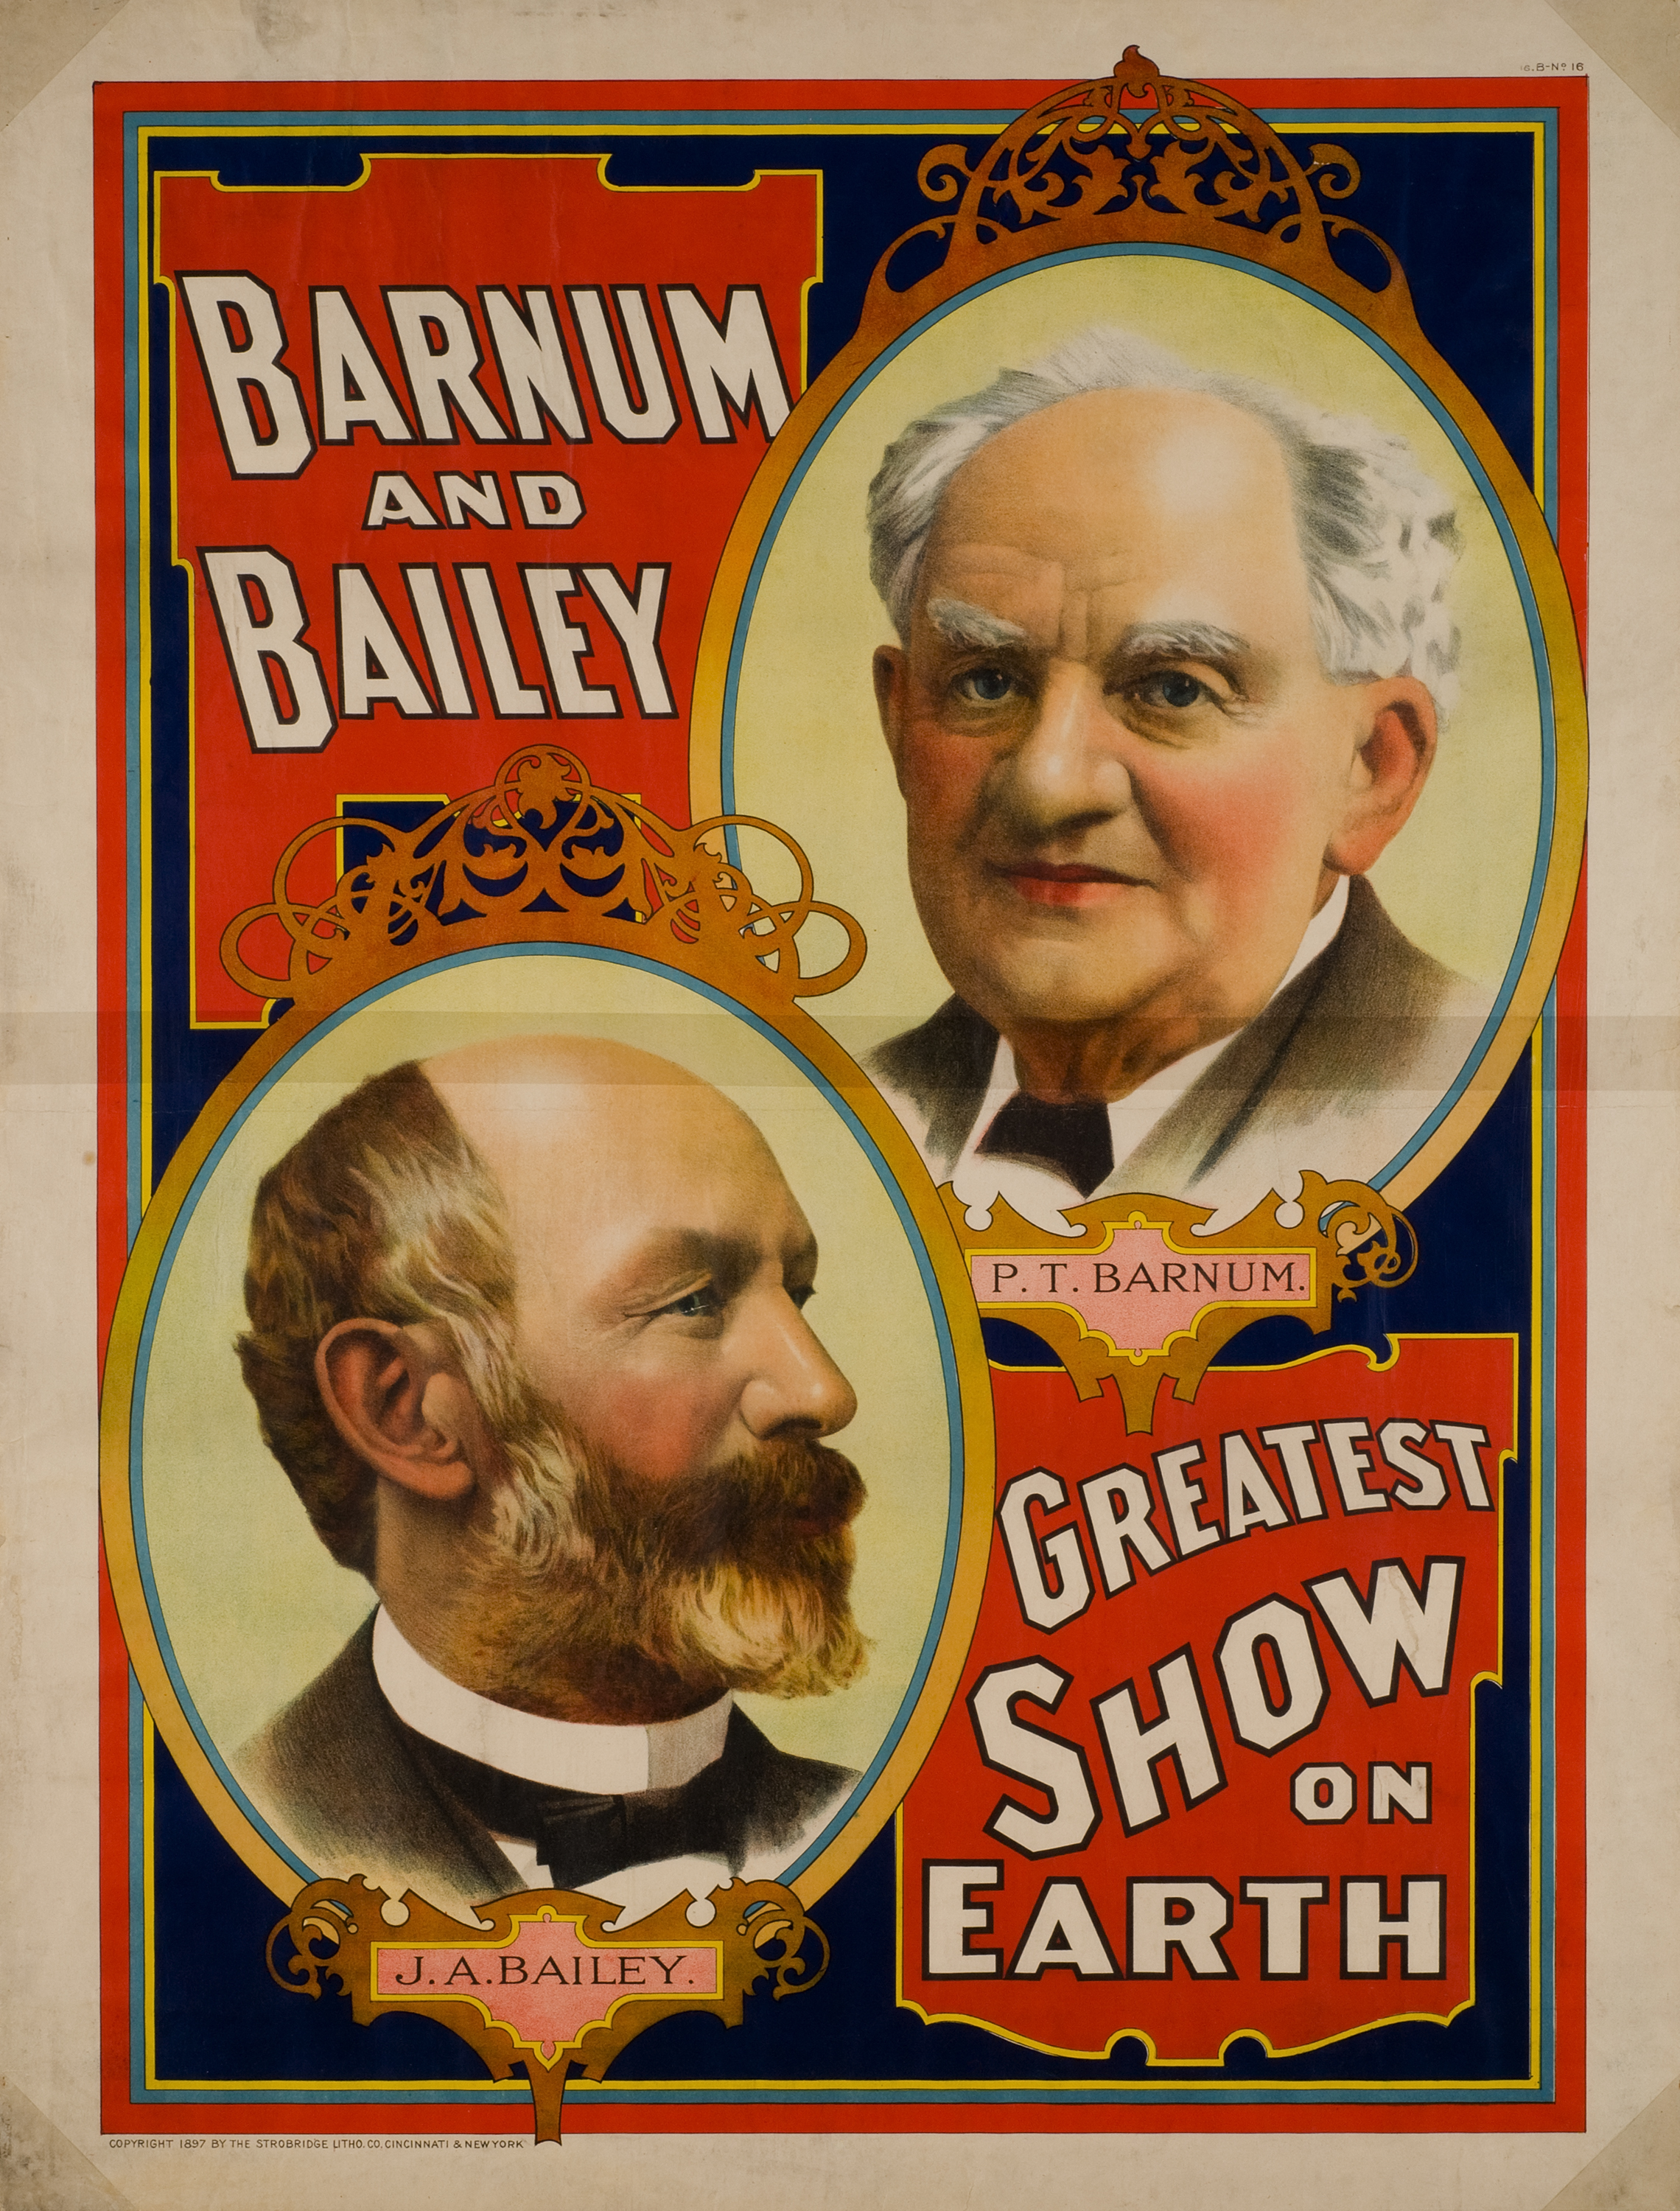 PT Barnum: America's Greatest Showman